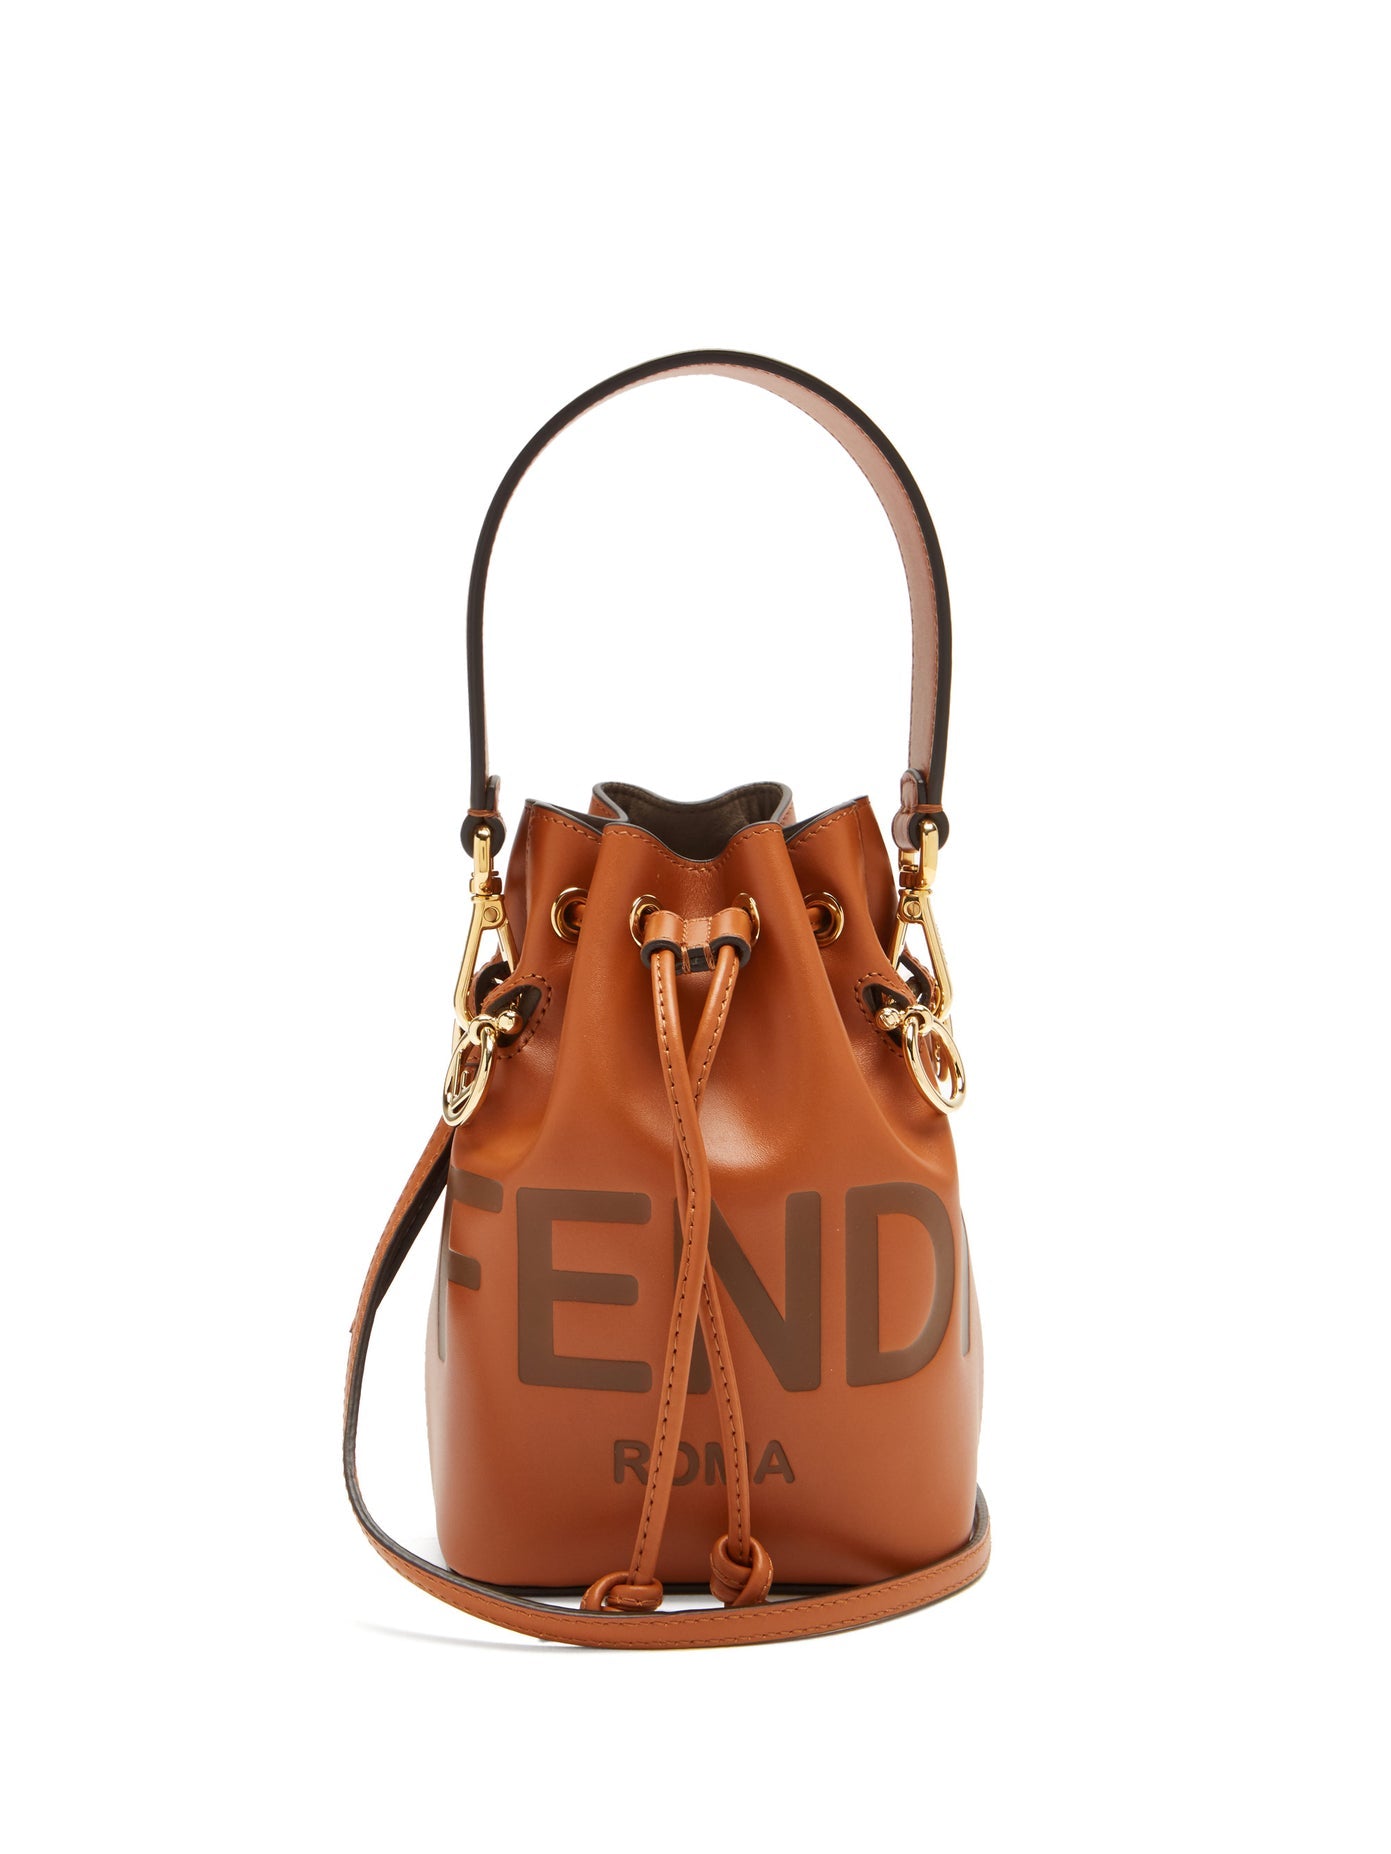 Fendi Mon Tresor - Brown Leather mini Bag.